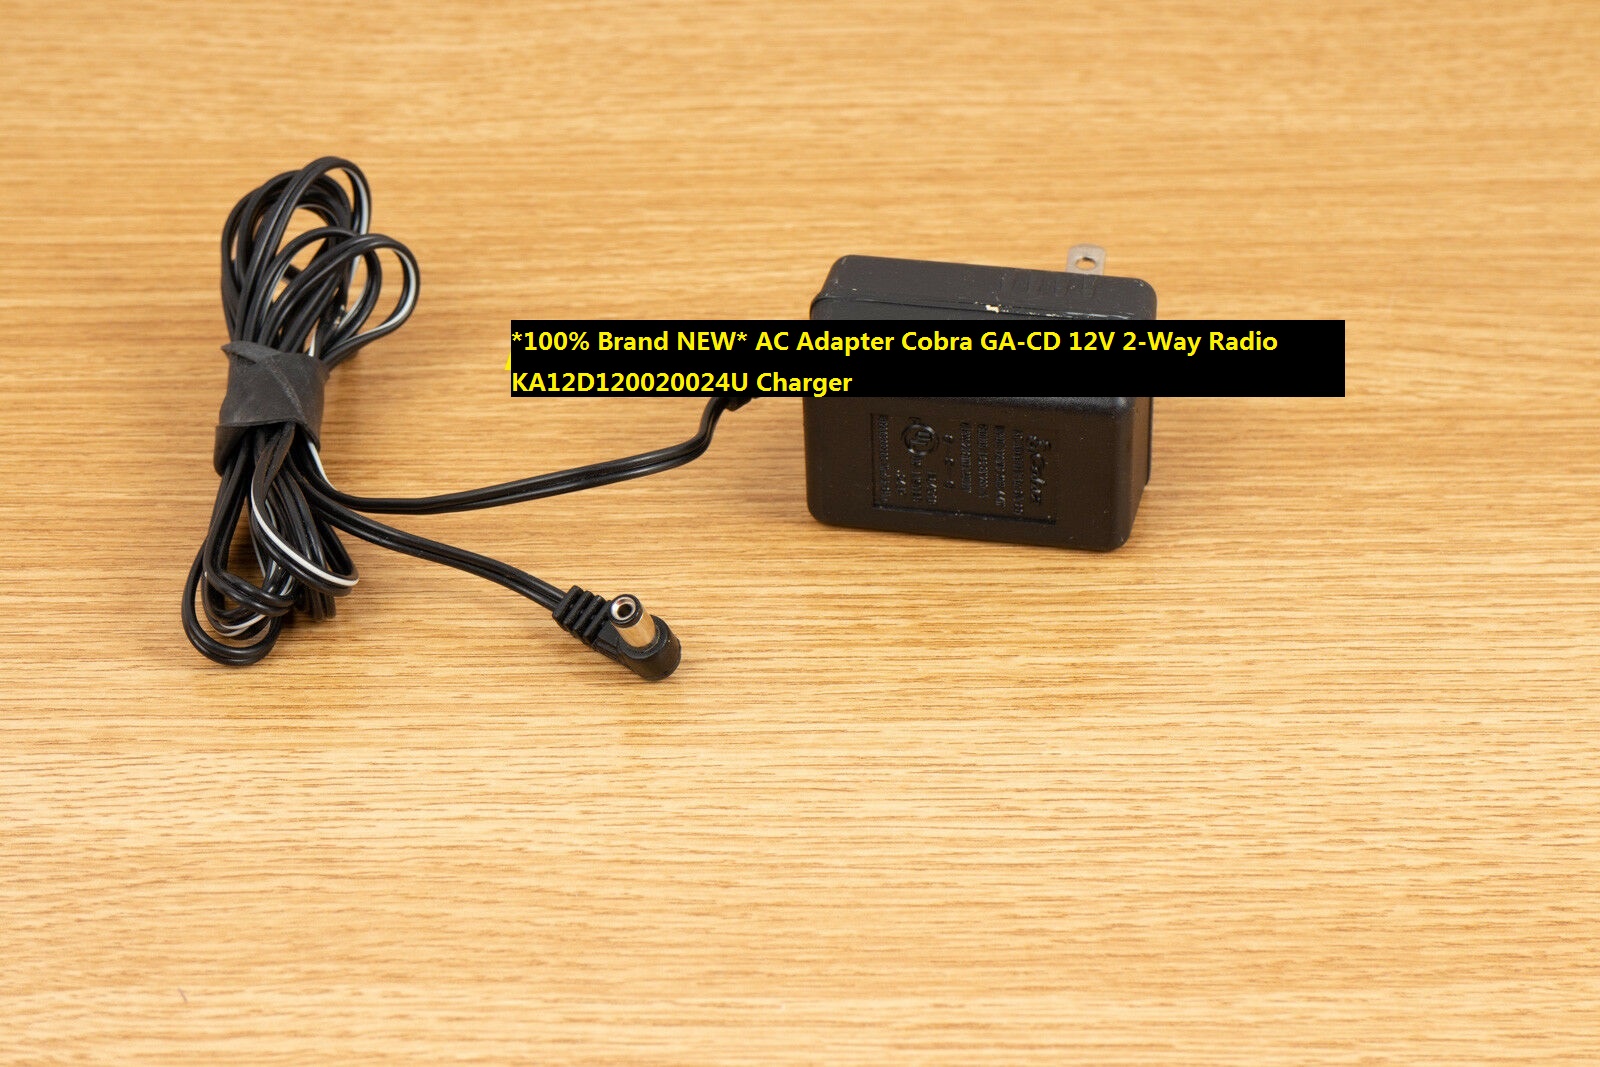 *100% Brand NEW* AC Adapter Cobra GA-CD 12V 2-Way Radio KA12D120020024U Charger - Click Image to Close